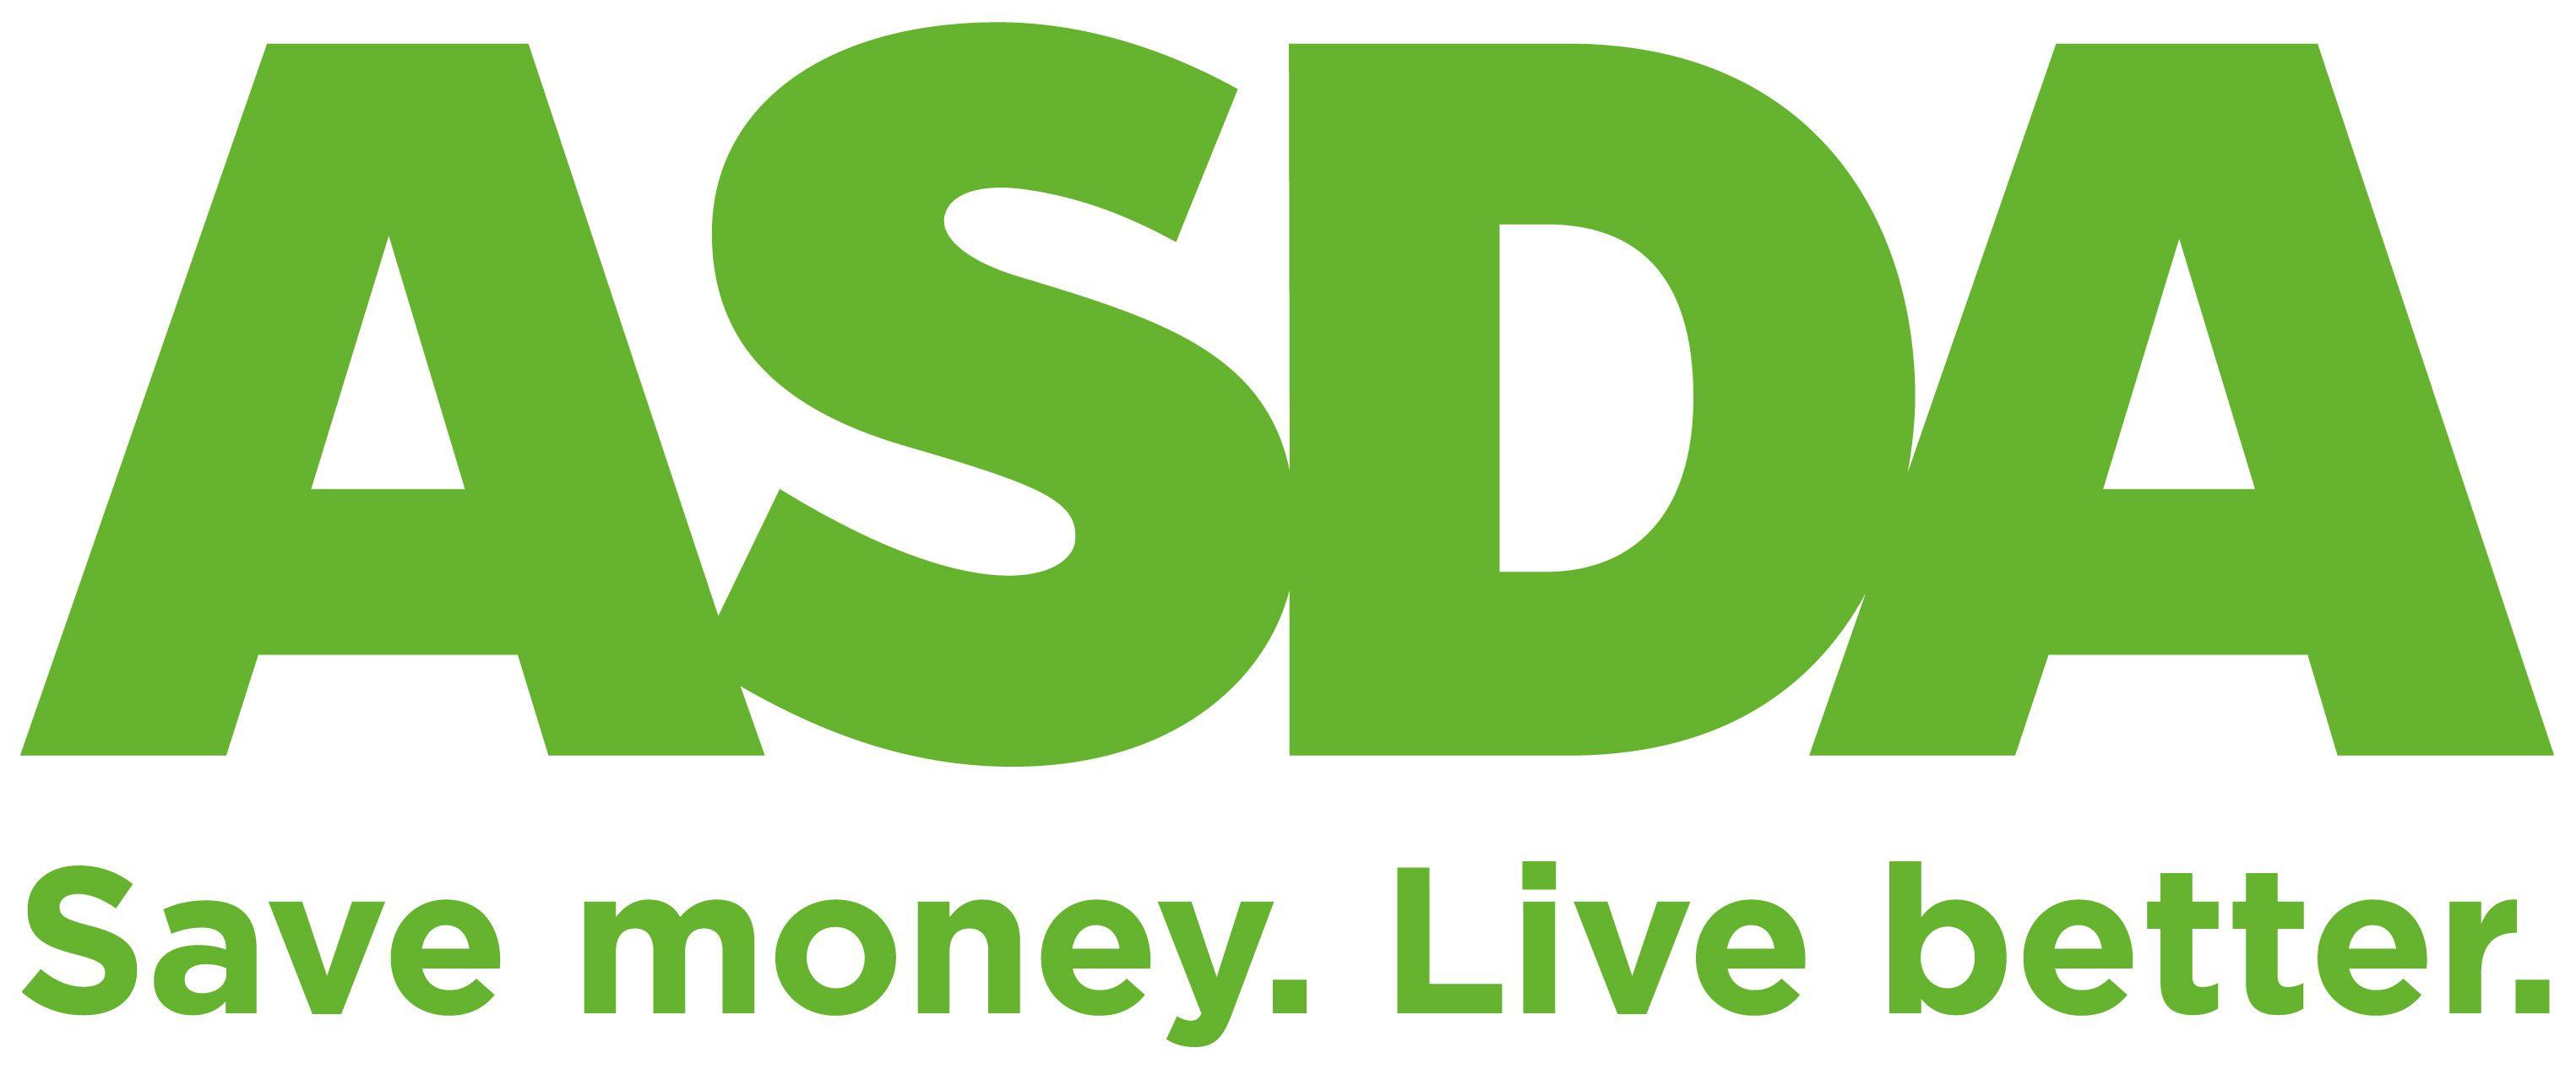 Walmart.com Save Money Live Better Logo - Our History